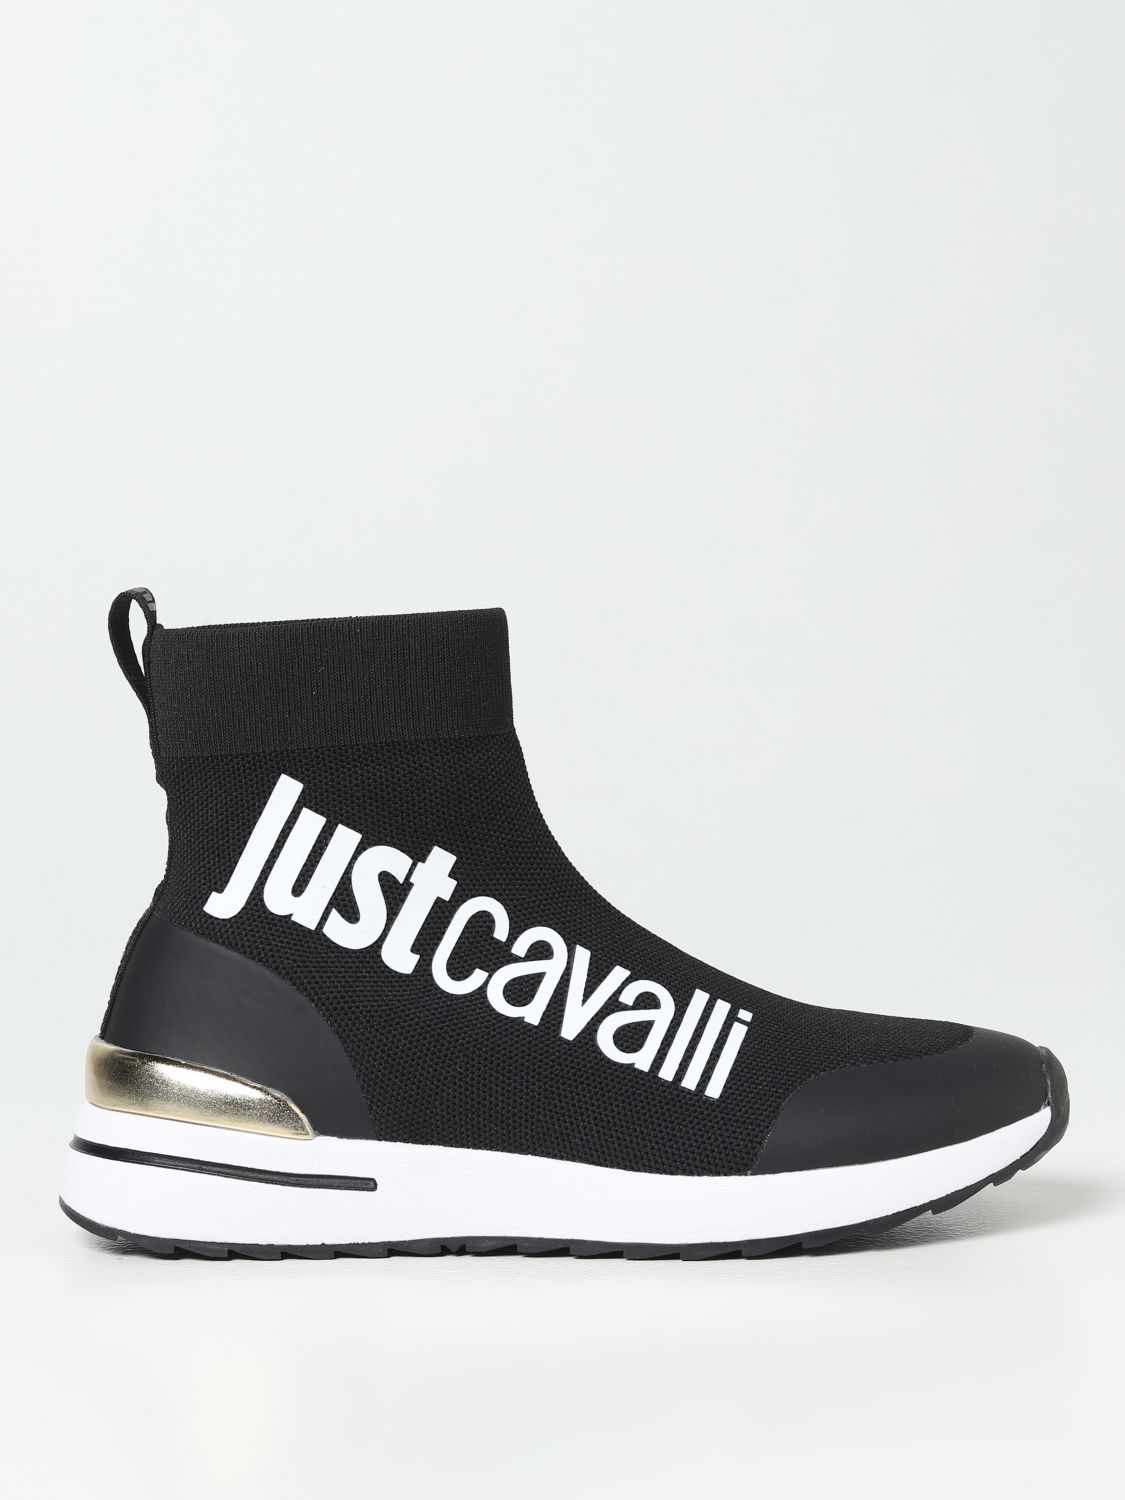 Just Cavalli Sneakers JUST CAVALLI Woman colour Black